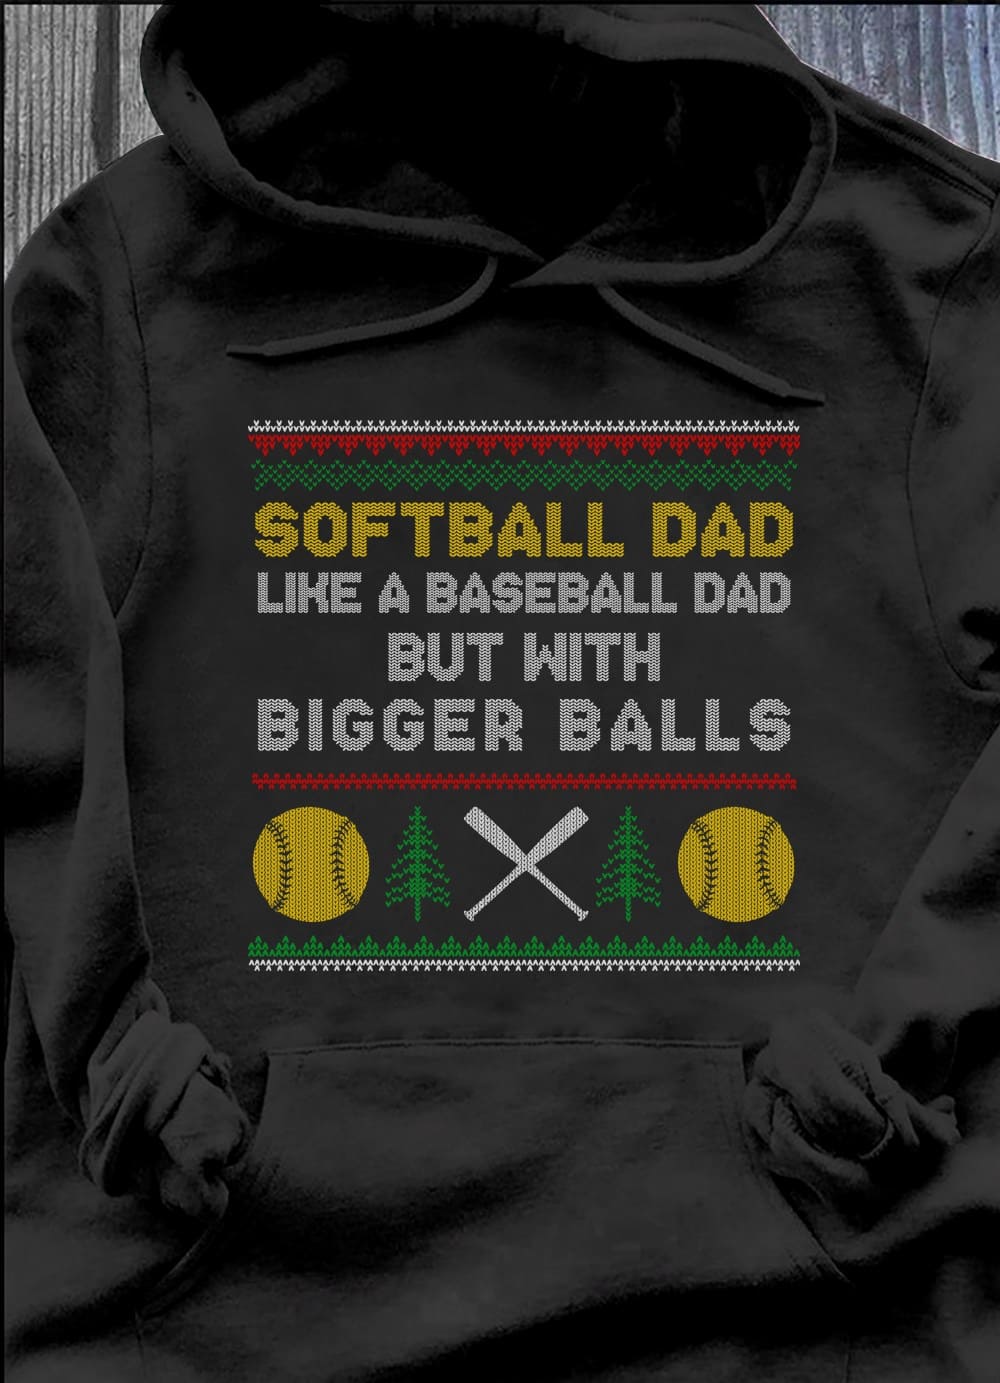 Softball dad like a baseball dad but with bigger balls - T-shirt for softball player, father's day gift